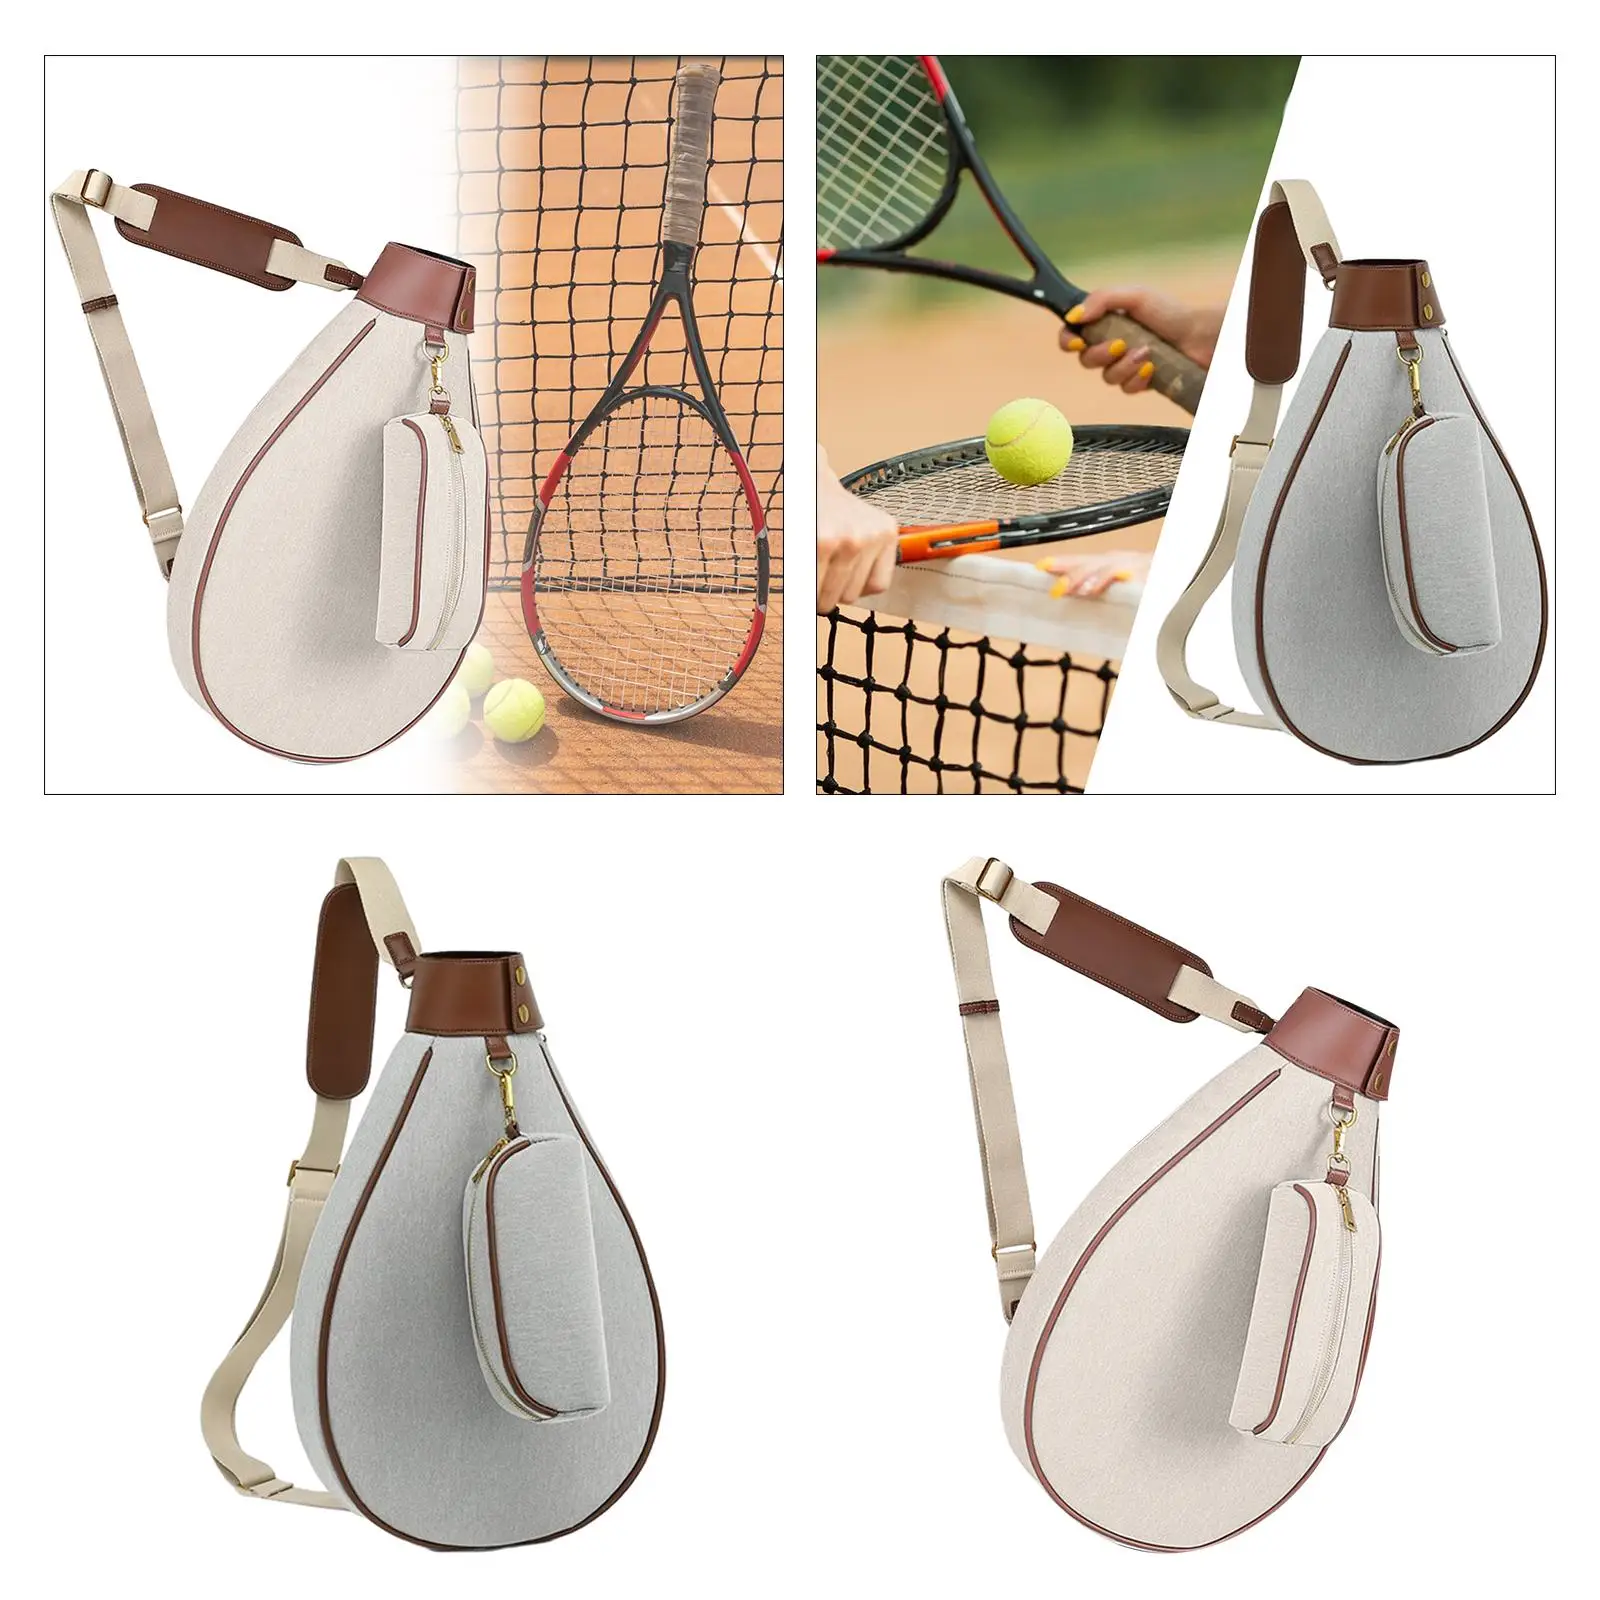 Tennis Bag Carrying Bag Portable Large Capacity Tennis Racket Bag for Badminton/squash Racquet/Tennis/Pickleball and Accessories